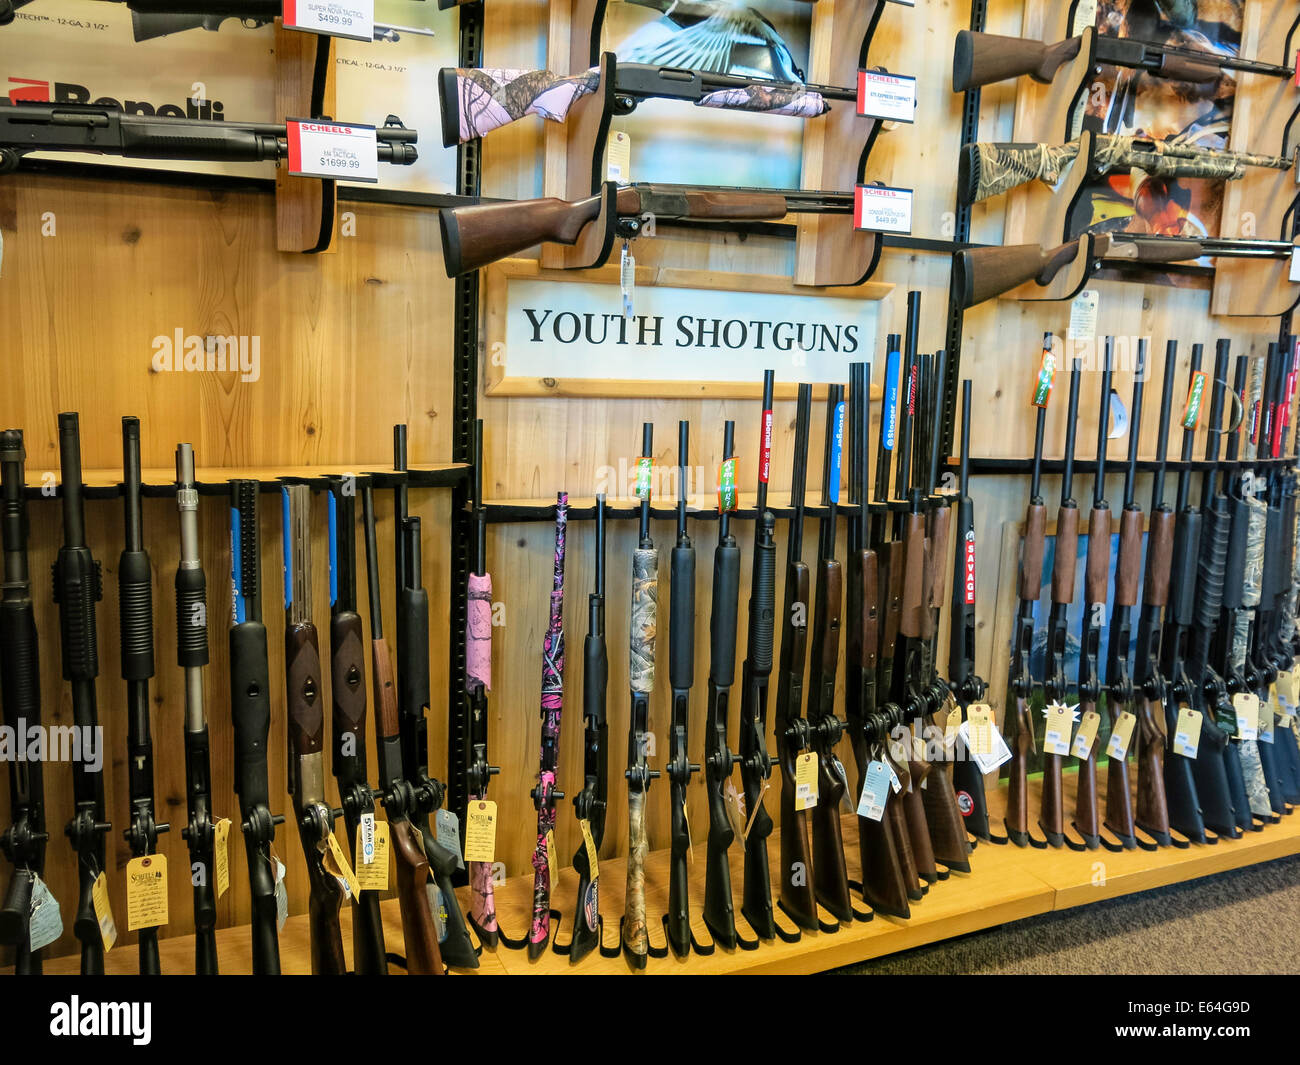 Youth Shotguns Aisle, Scheels Sporting Goods Store, Great Falls, Montana, USA Stock Photo